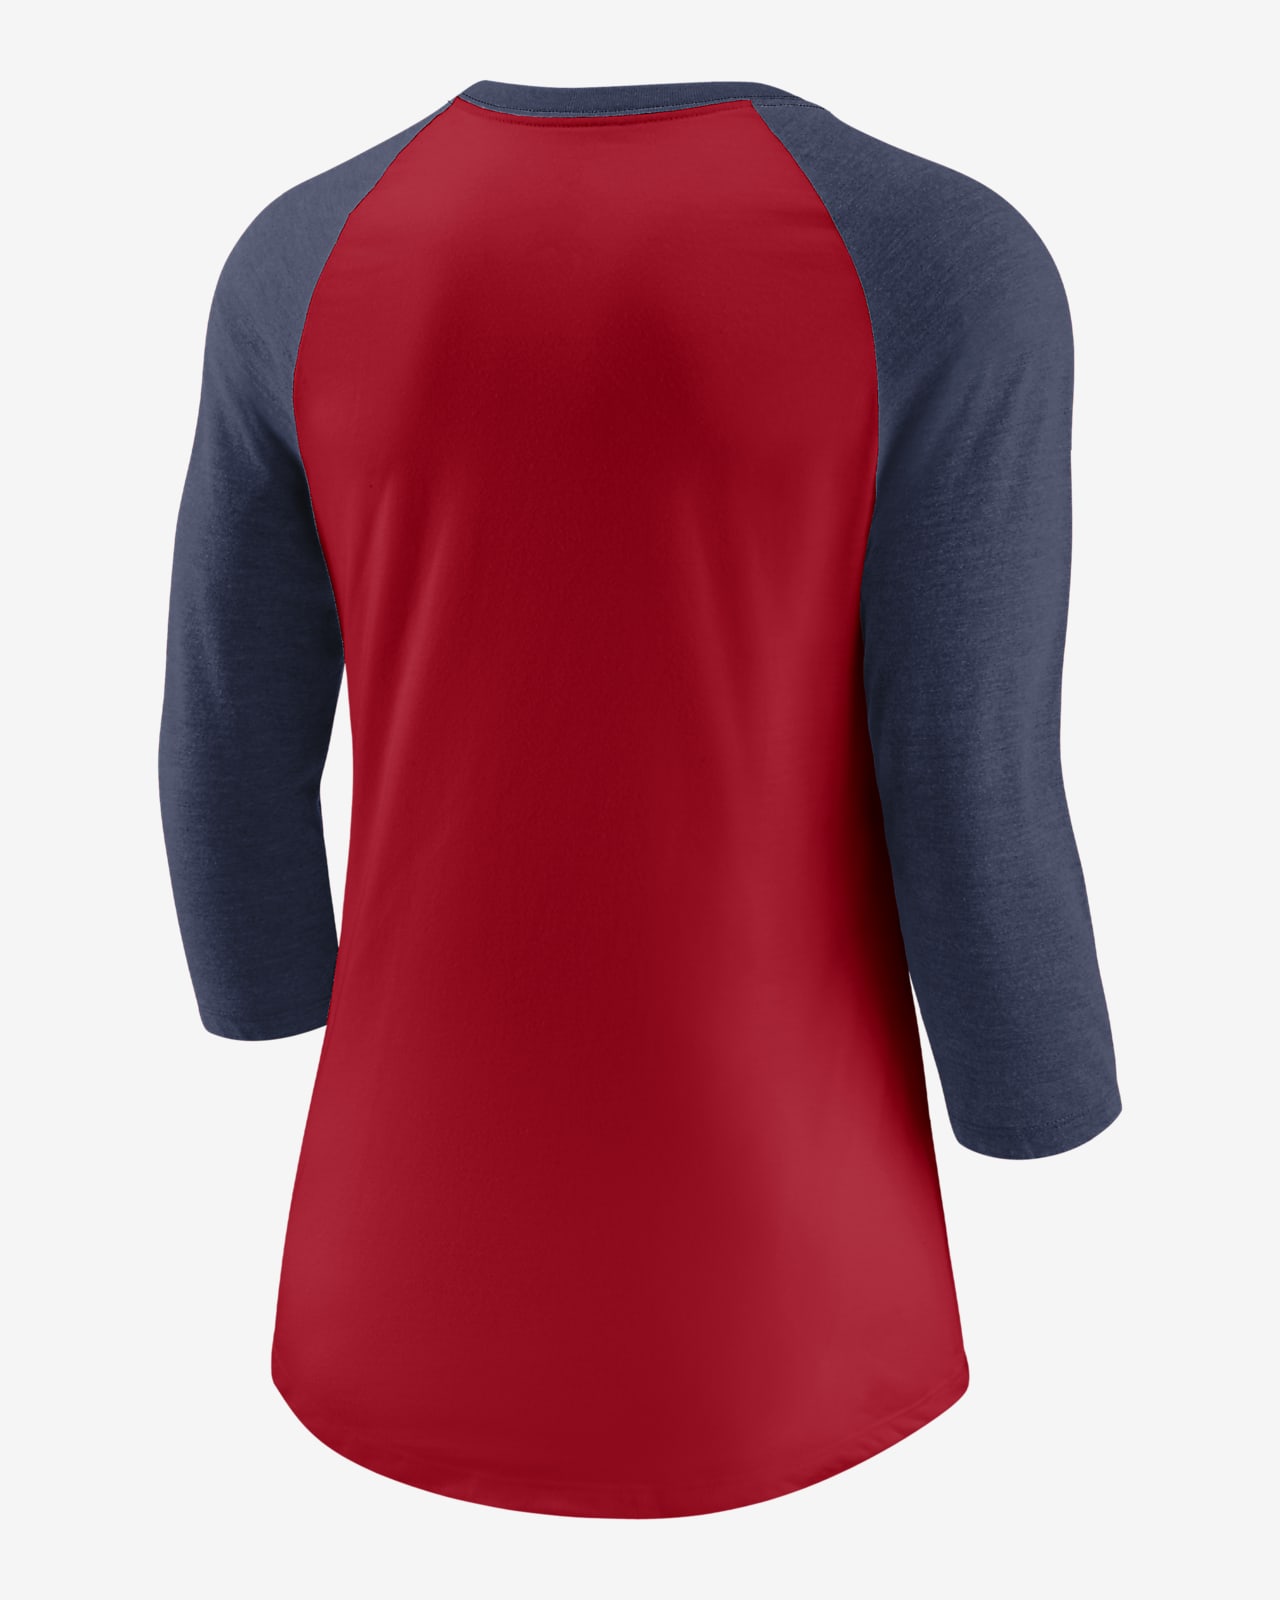 Nike Next Up (MLB St. Louis Cardinals) Women's 3/4-Sleeve Top.